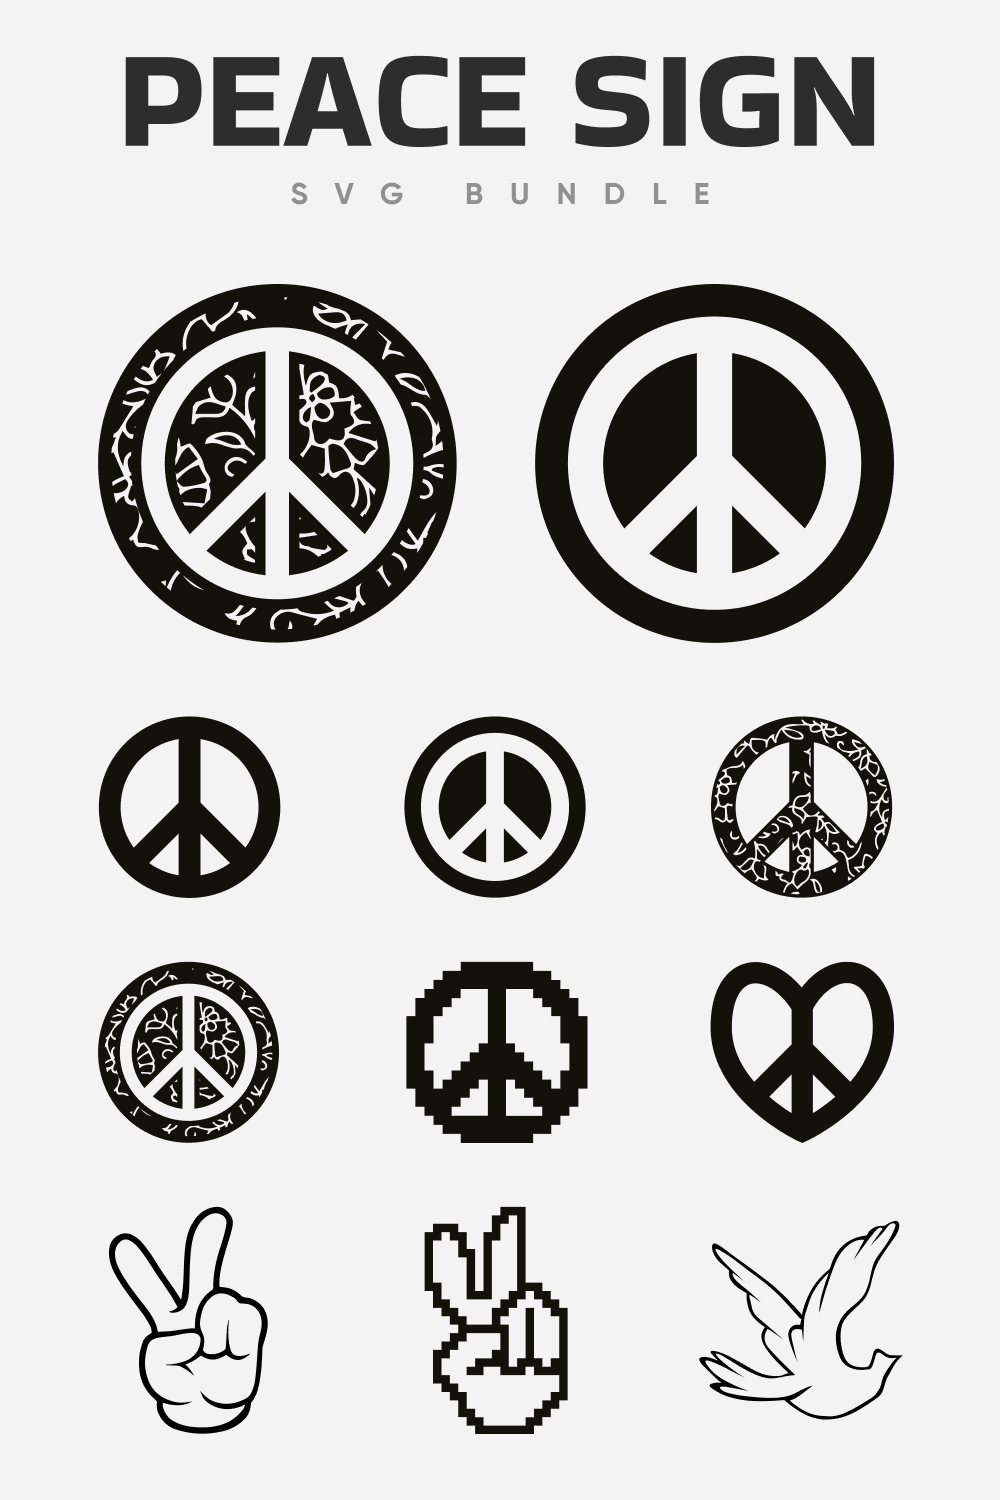 Peace sign SVG bundle.